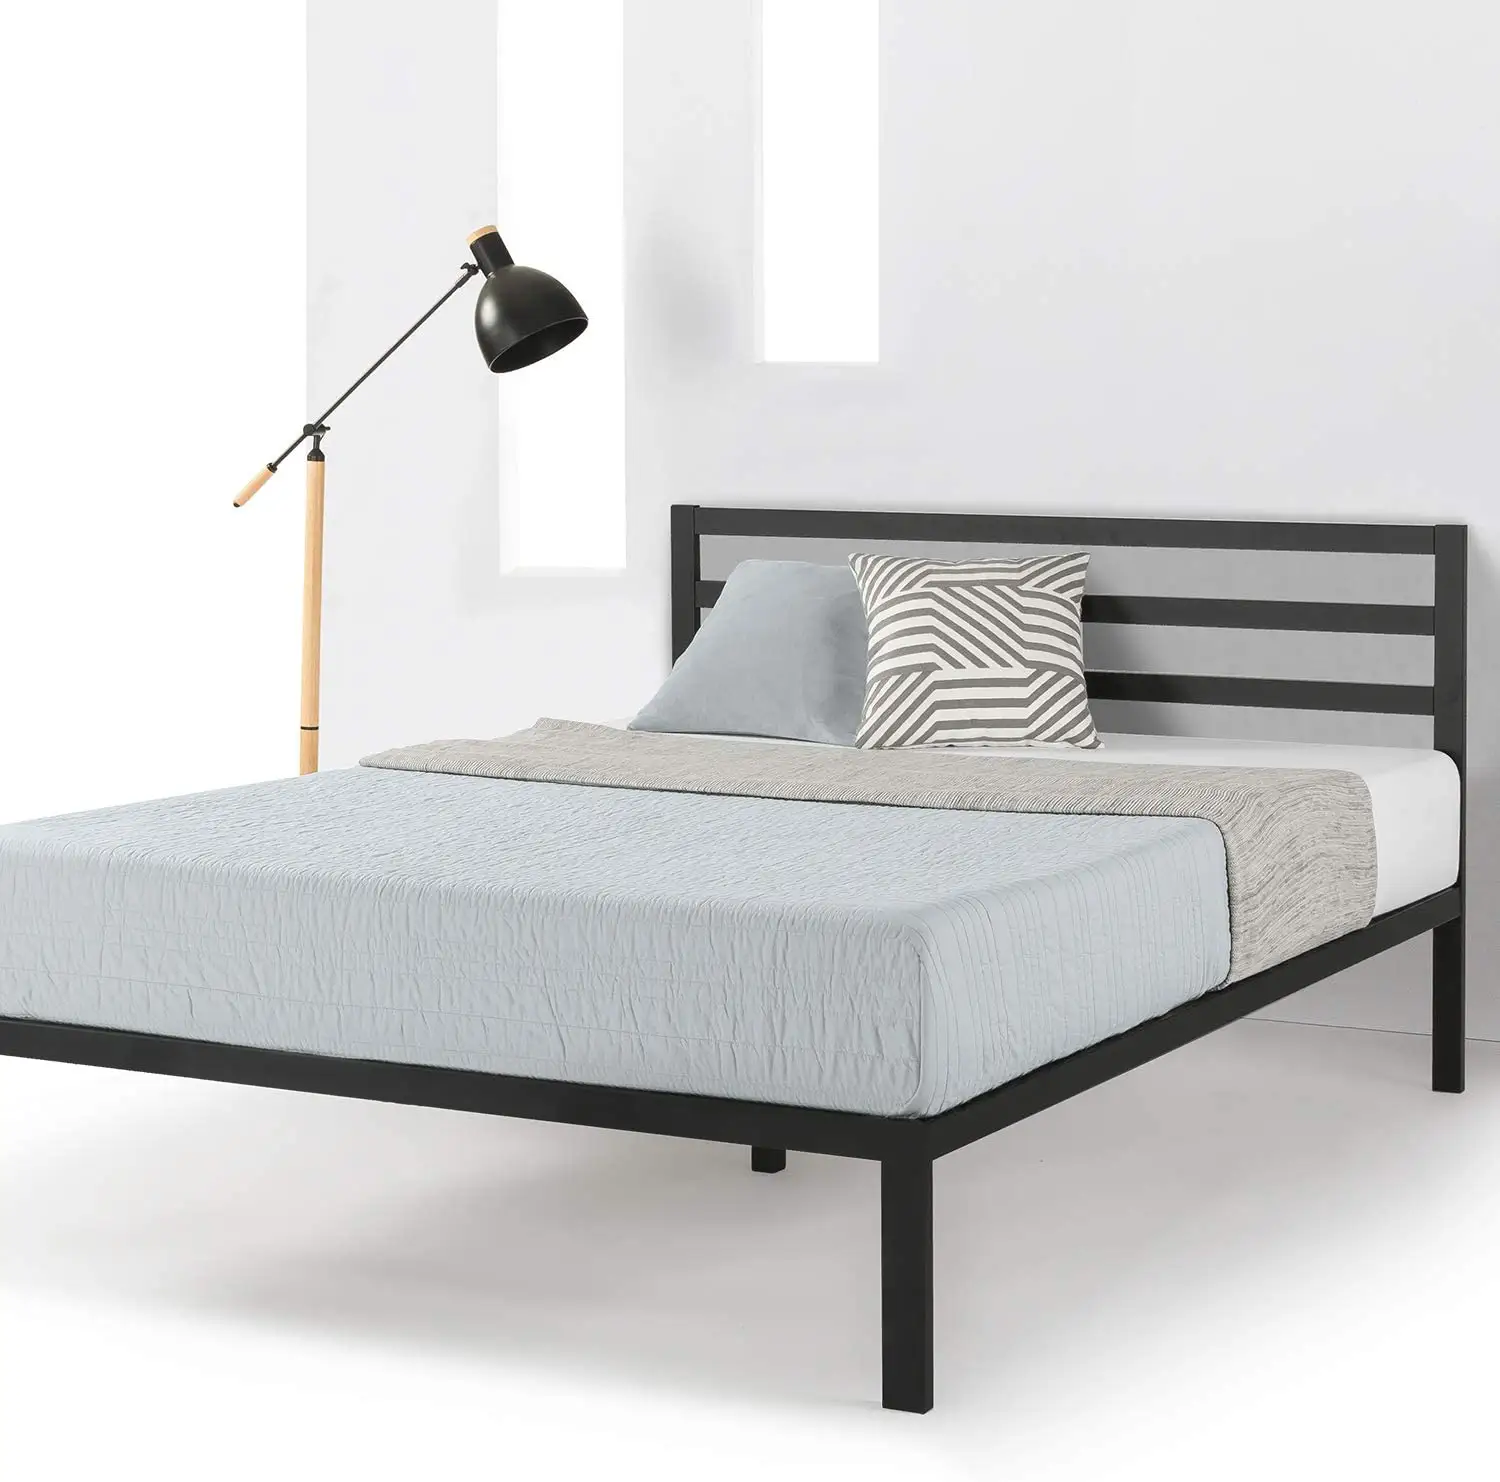 Mellow rangka tempat tidur Platform logam tugas berat 14 inci Ratu Logo besi tempa tempat tidur rumah Modern tempat tidur logam dengan bingkai hitam